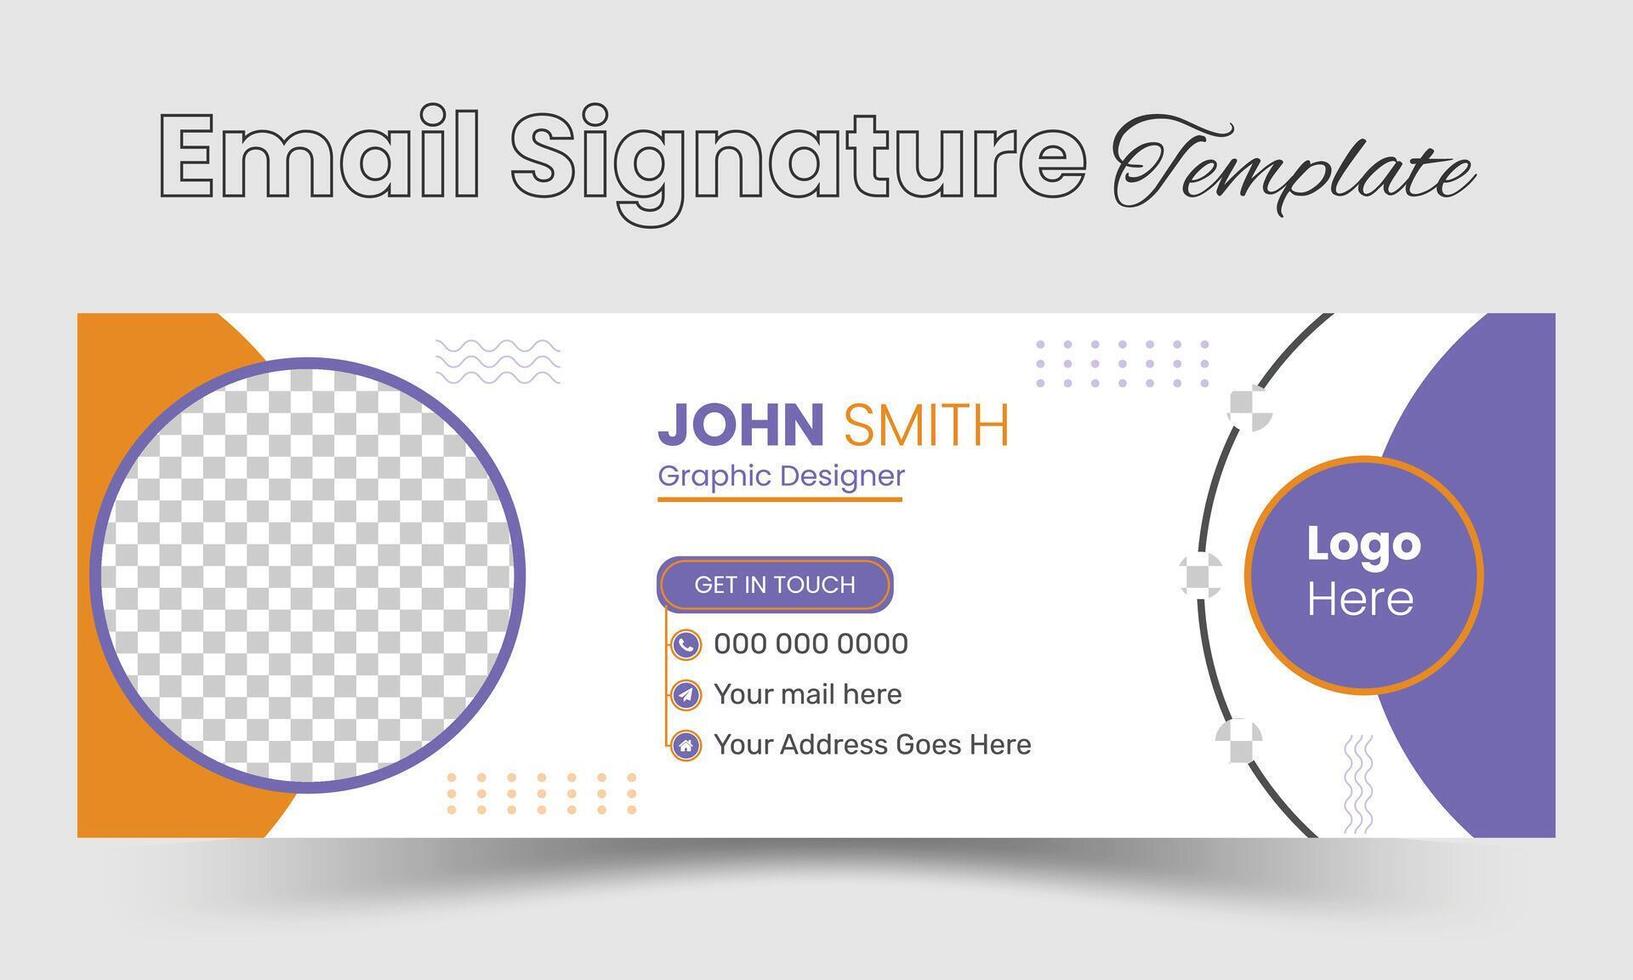 entreprise moderne email Signature conception modèle. email Signature modèle conception vecteur